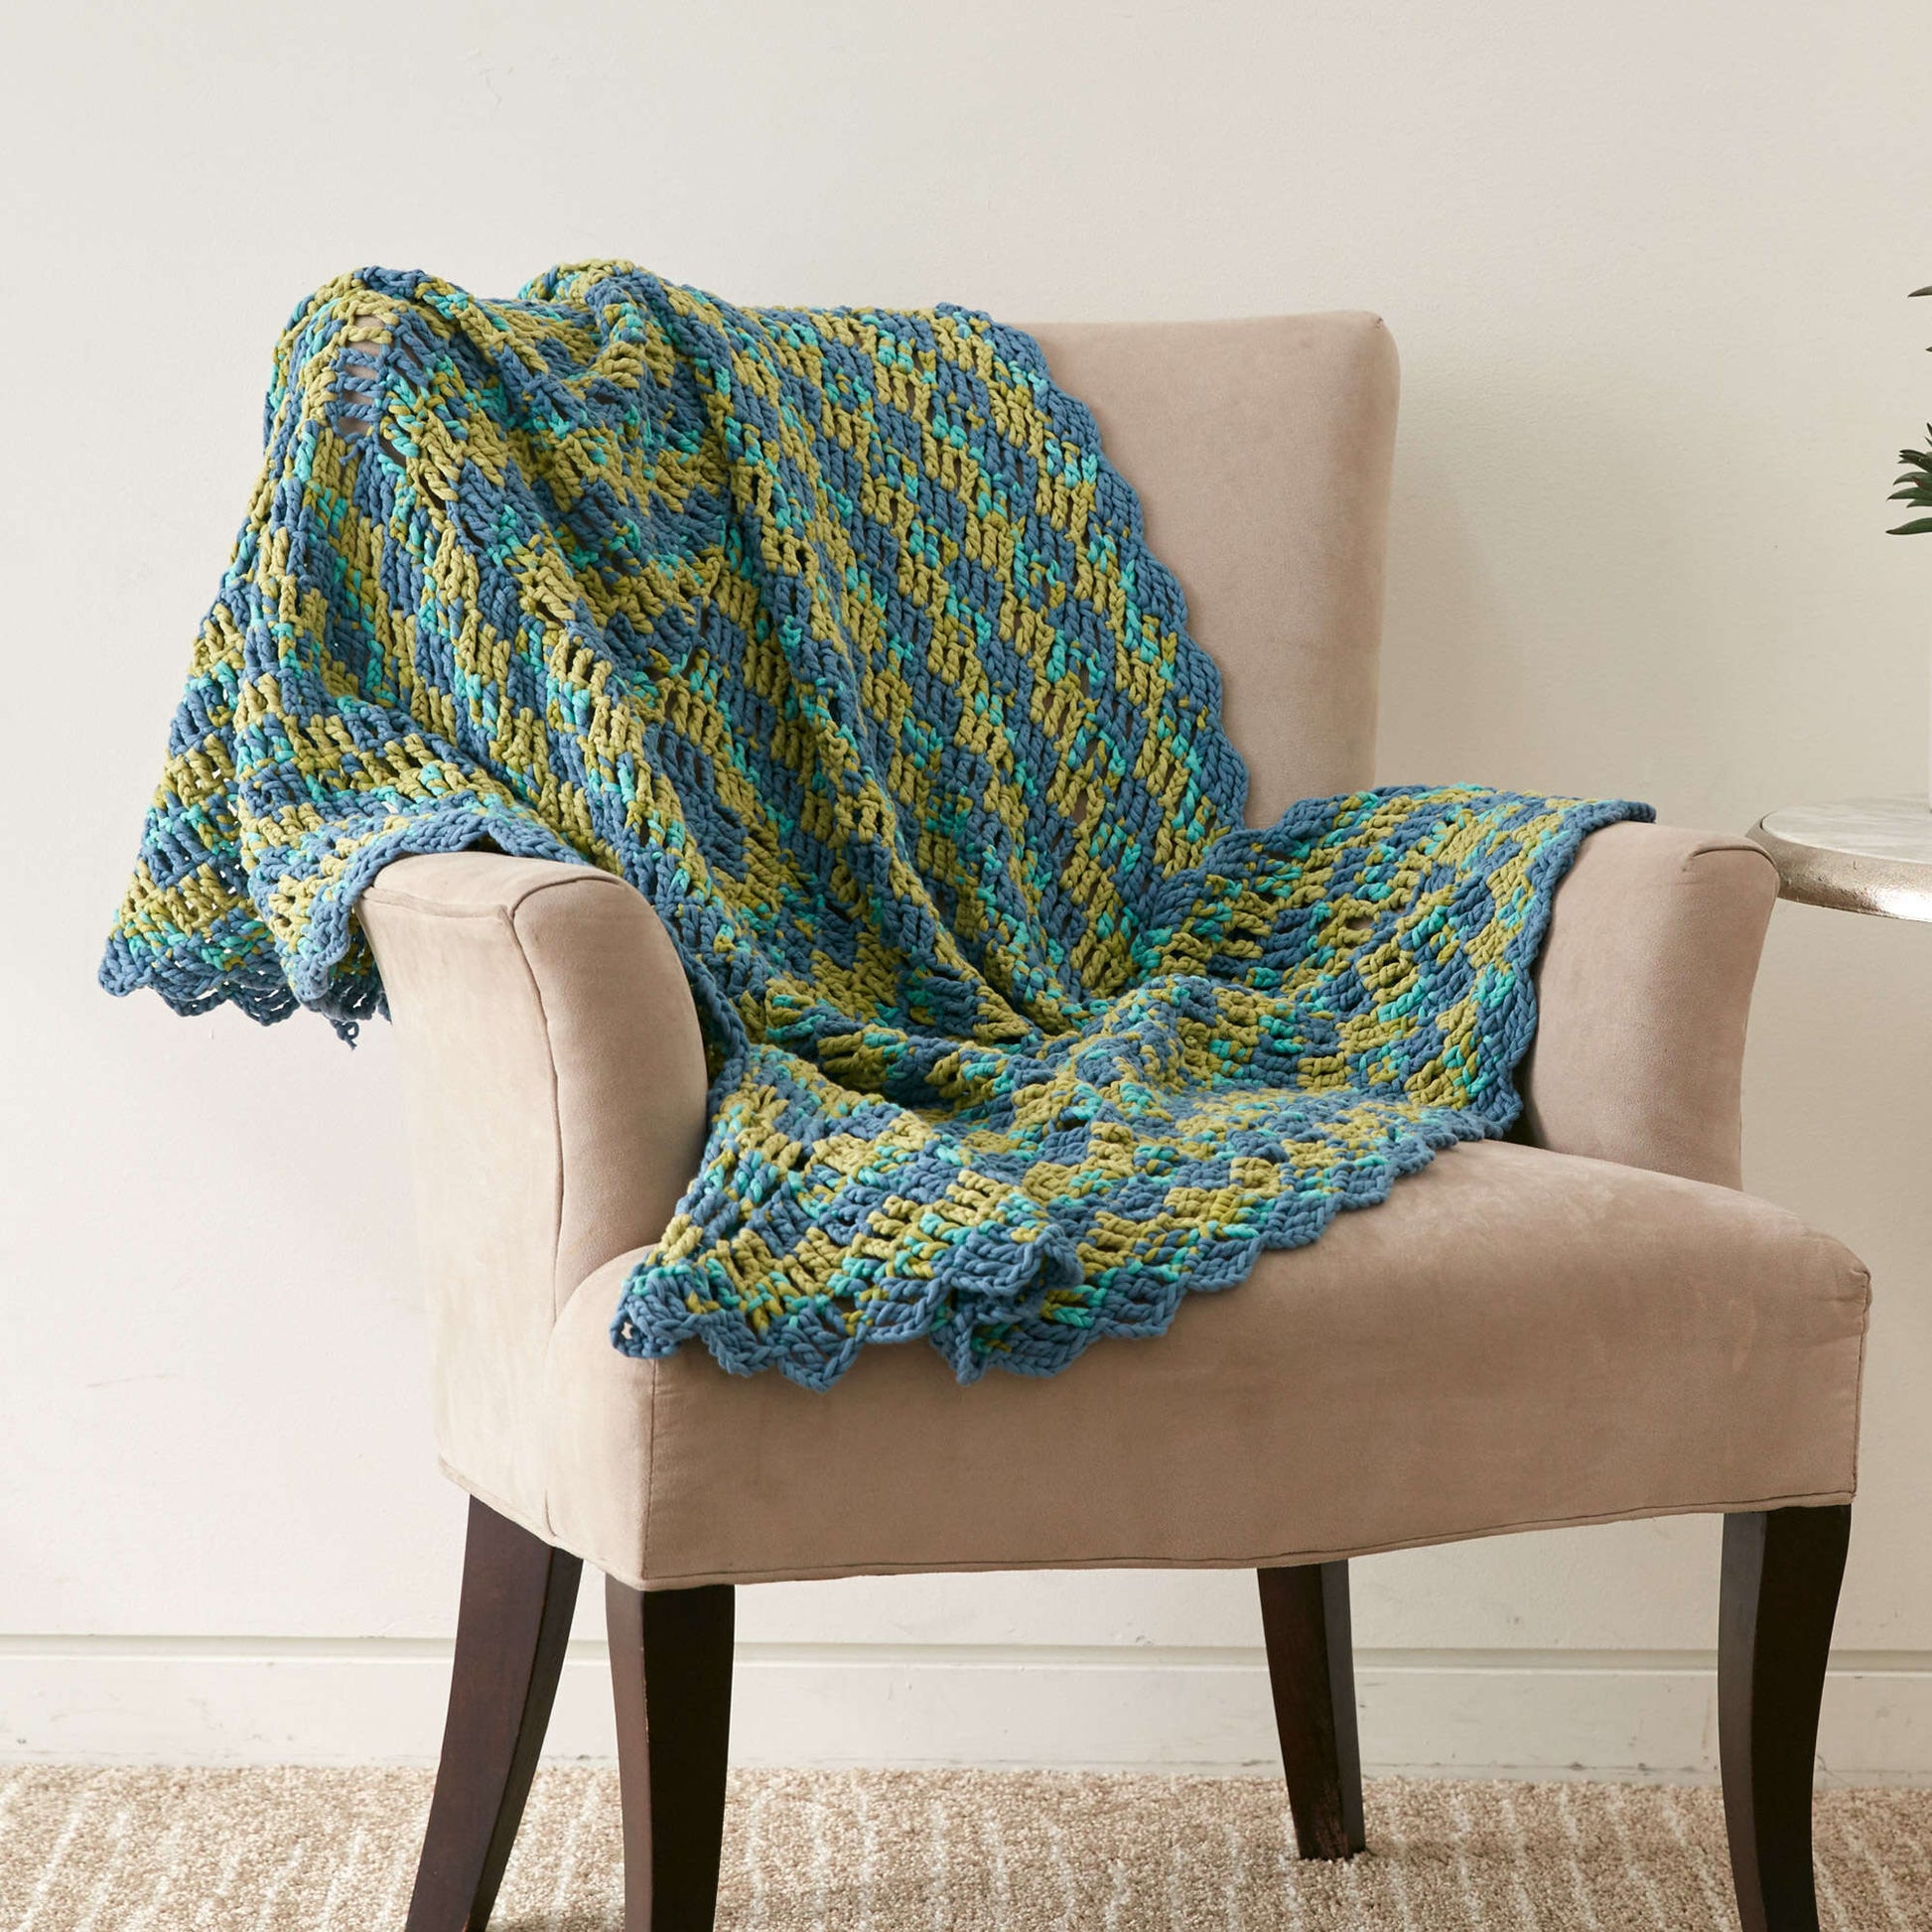 Bernat Round The Block Afghan Crochet Blanket made in Bernat Maker Home Dec yarn